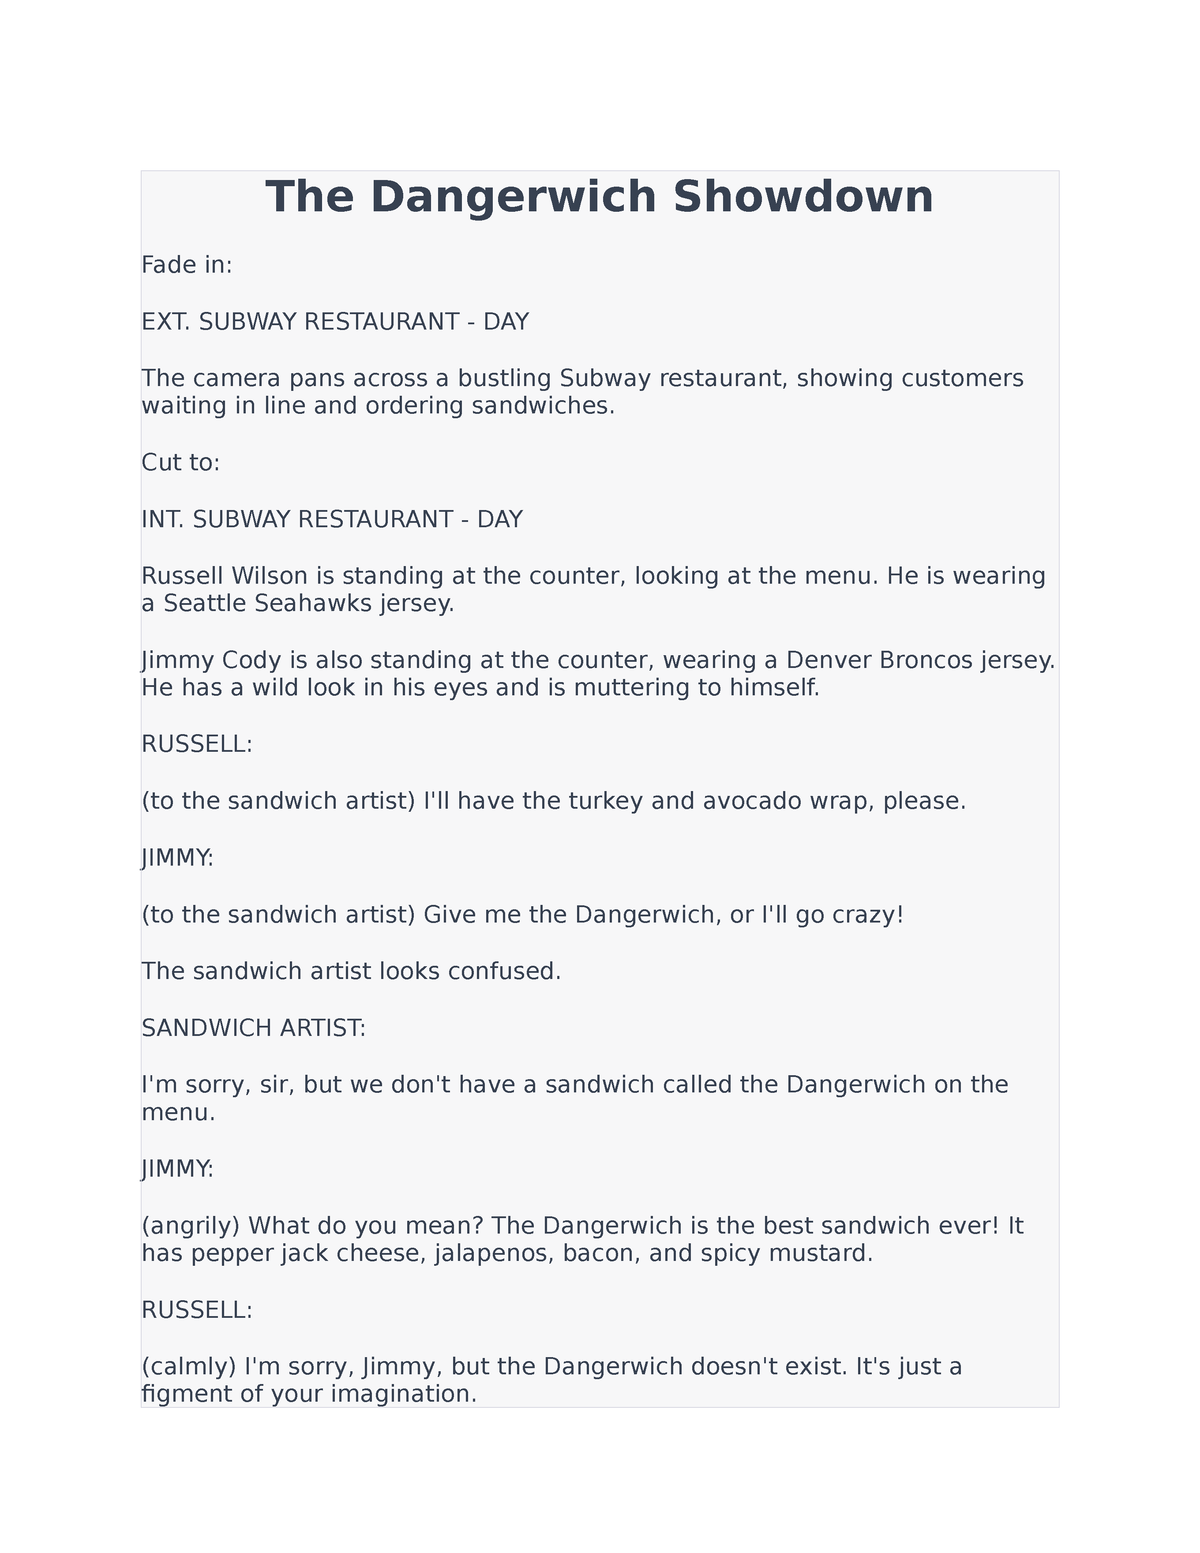 The Dangerwich Showdown - SUBWAY RESTAURANT - DAY The camera pans across a  bustling Subway - Studocu